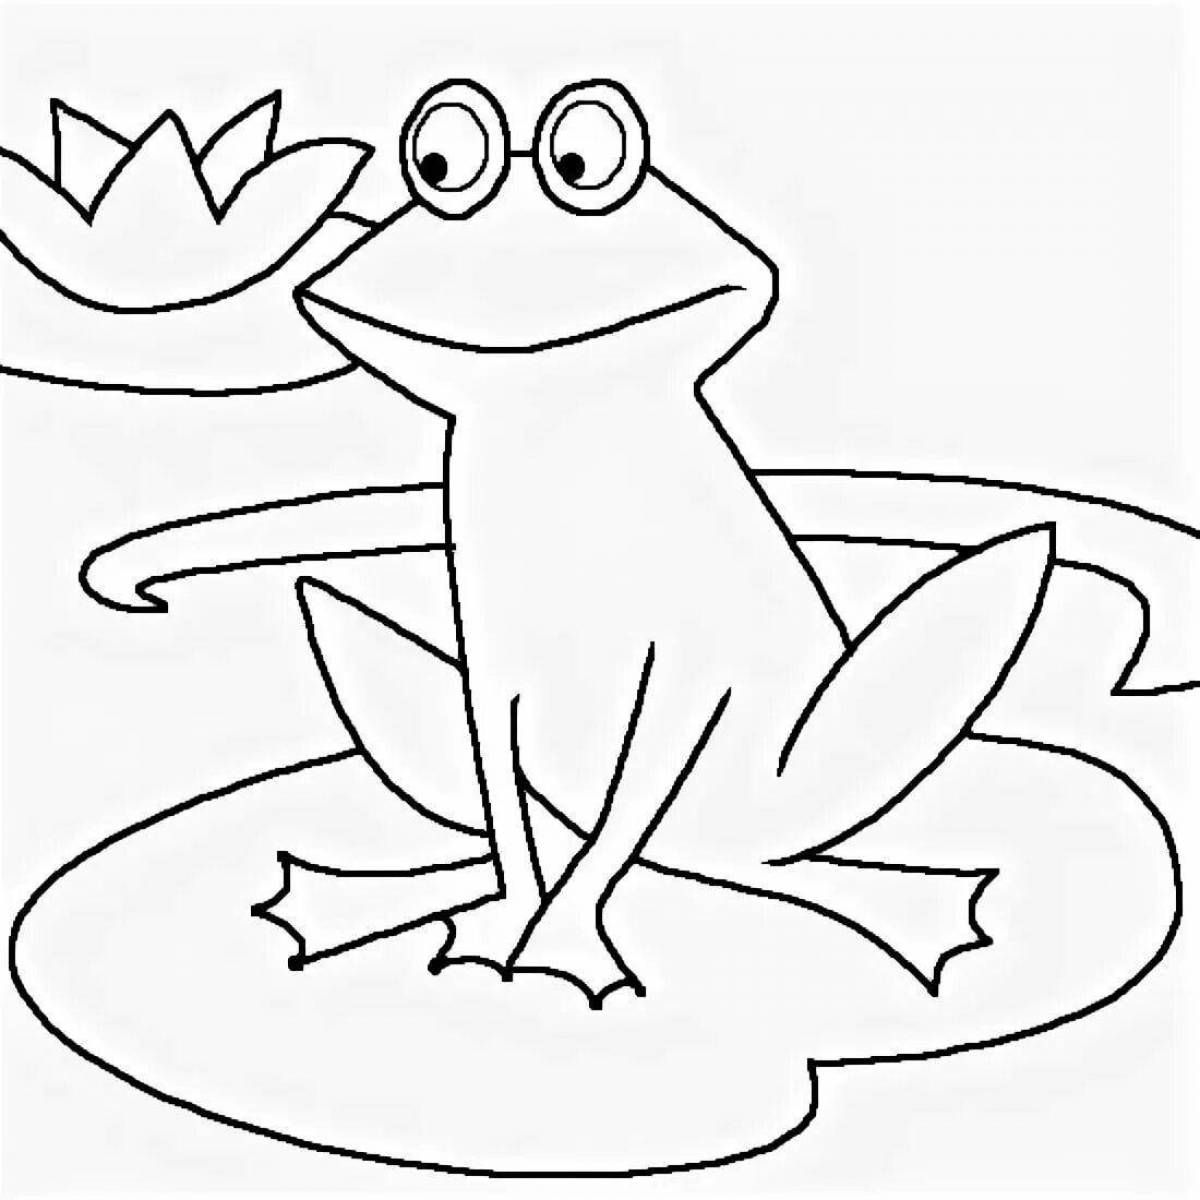 Coloring book energetic frog traveler